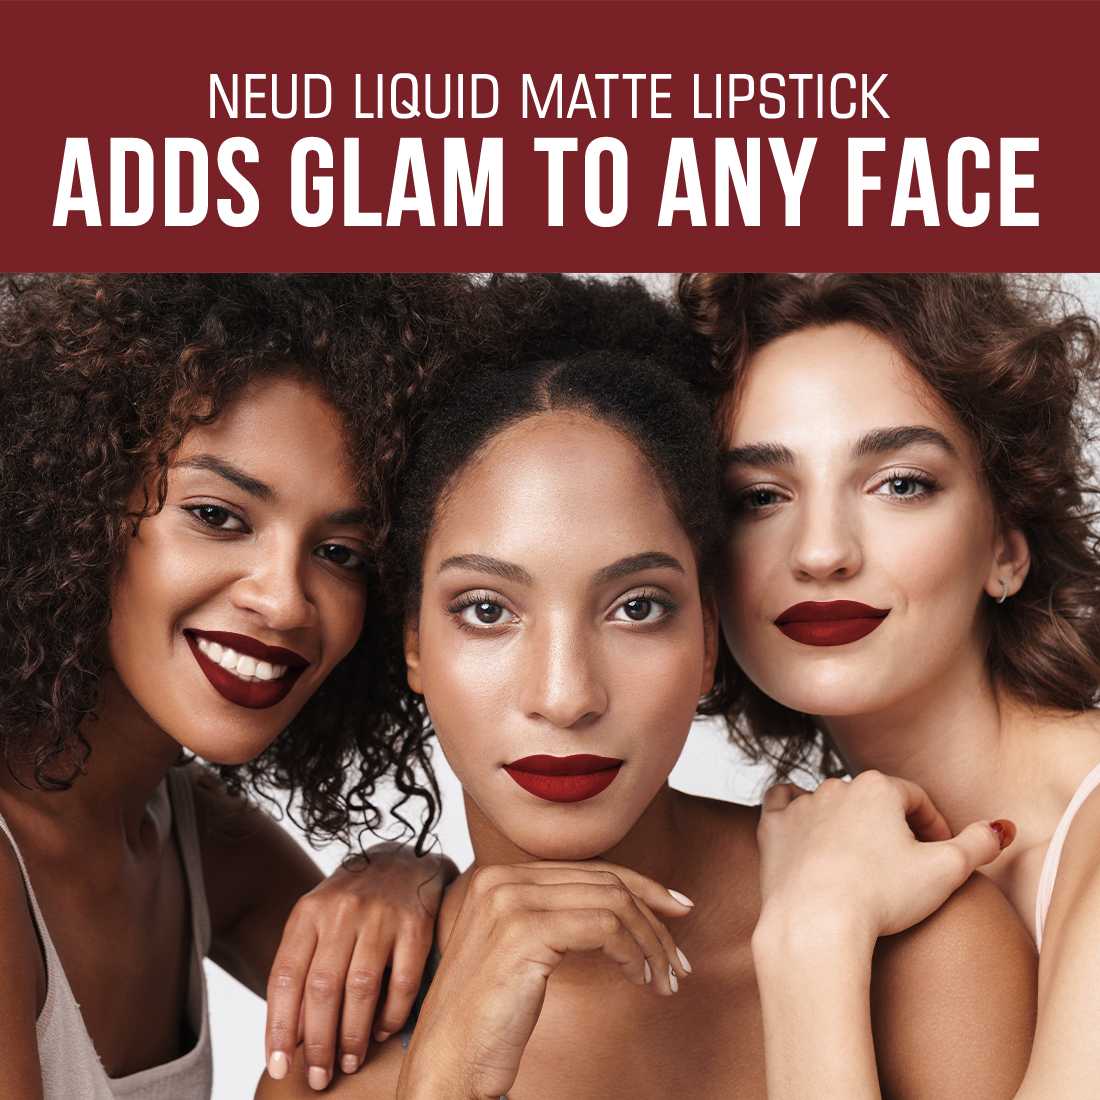 NEUD Matte Liquid Lipstick Mocha Brownie with Jojoba Oil, Vitamin E and Almond Oil - Smudge Proof 12-hour Stay Formula with Free Lip Gloss